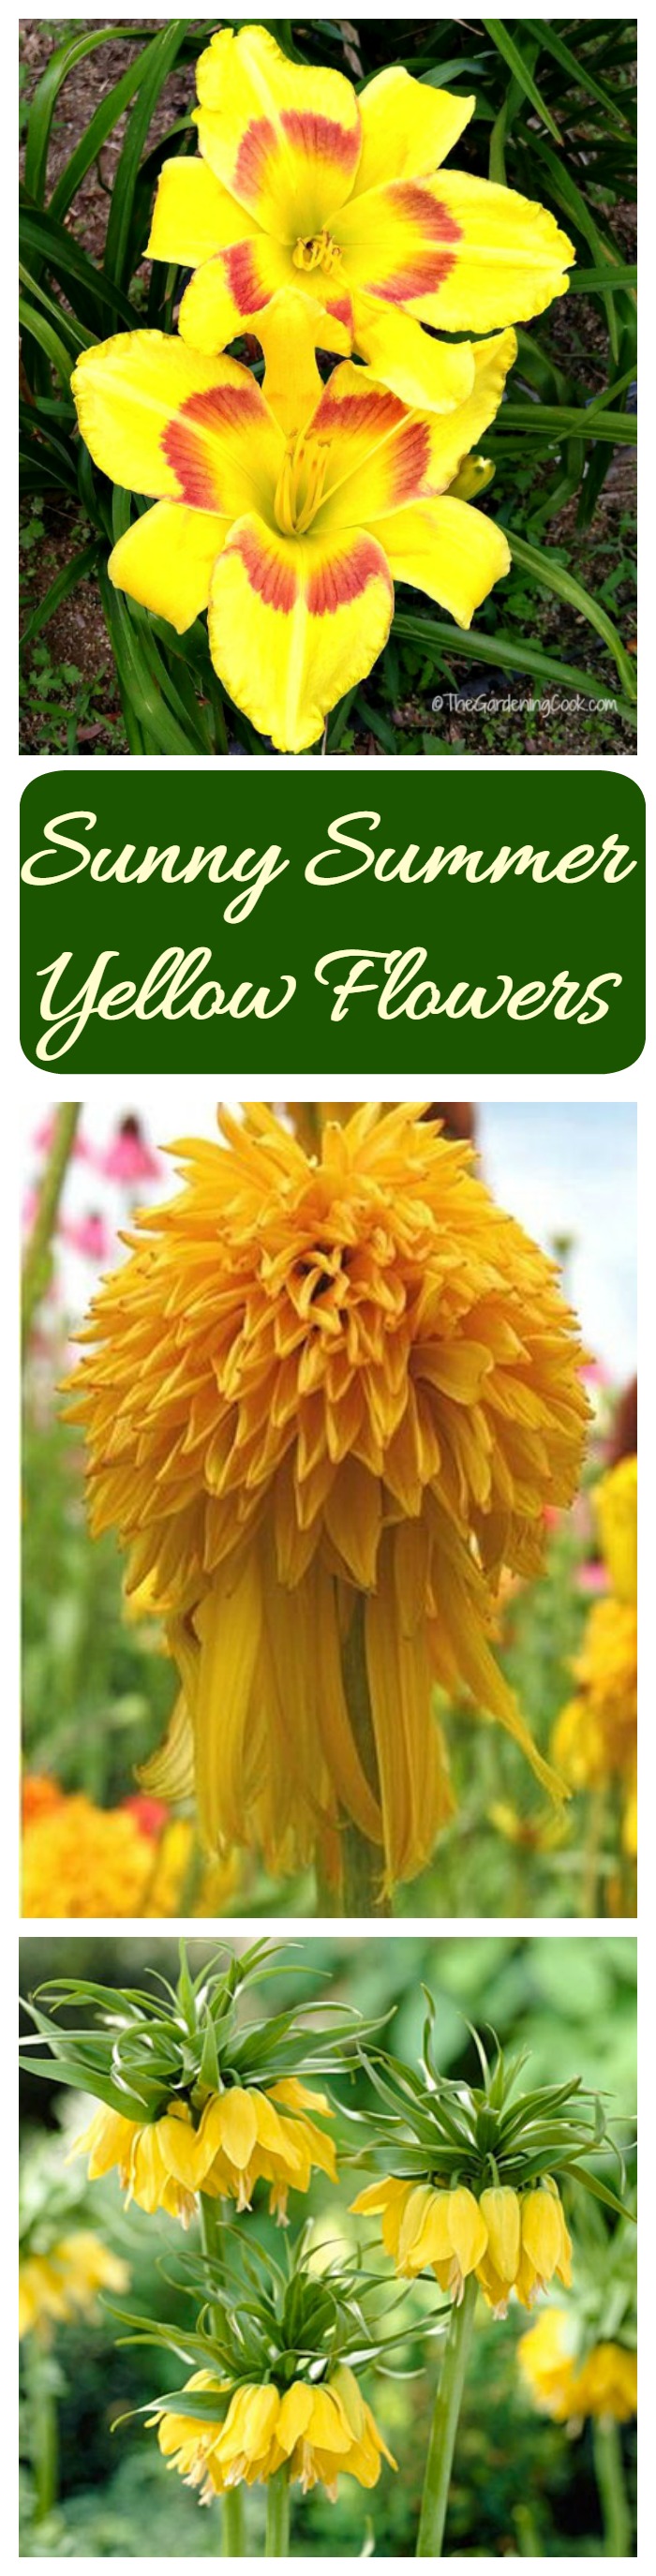 Yellow Flowers Bring a Blast of Sunshine to the Summer Garden